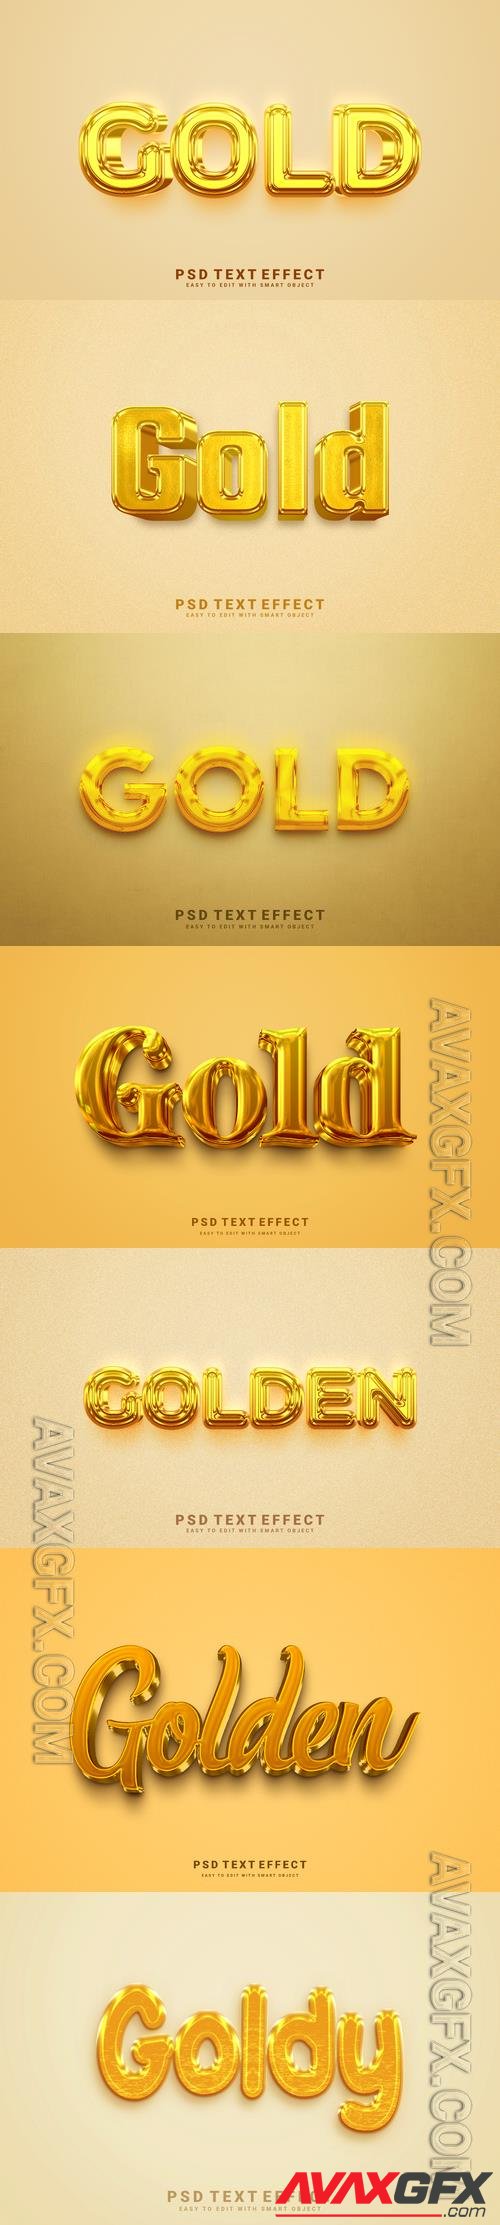 PSD gold, golden creative editable text effect design